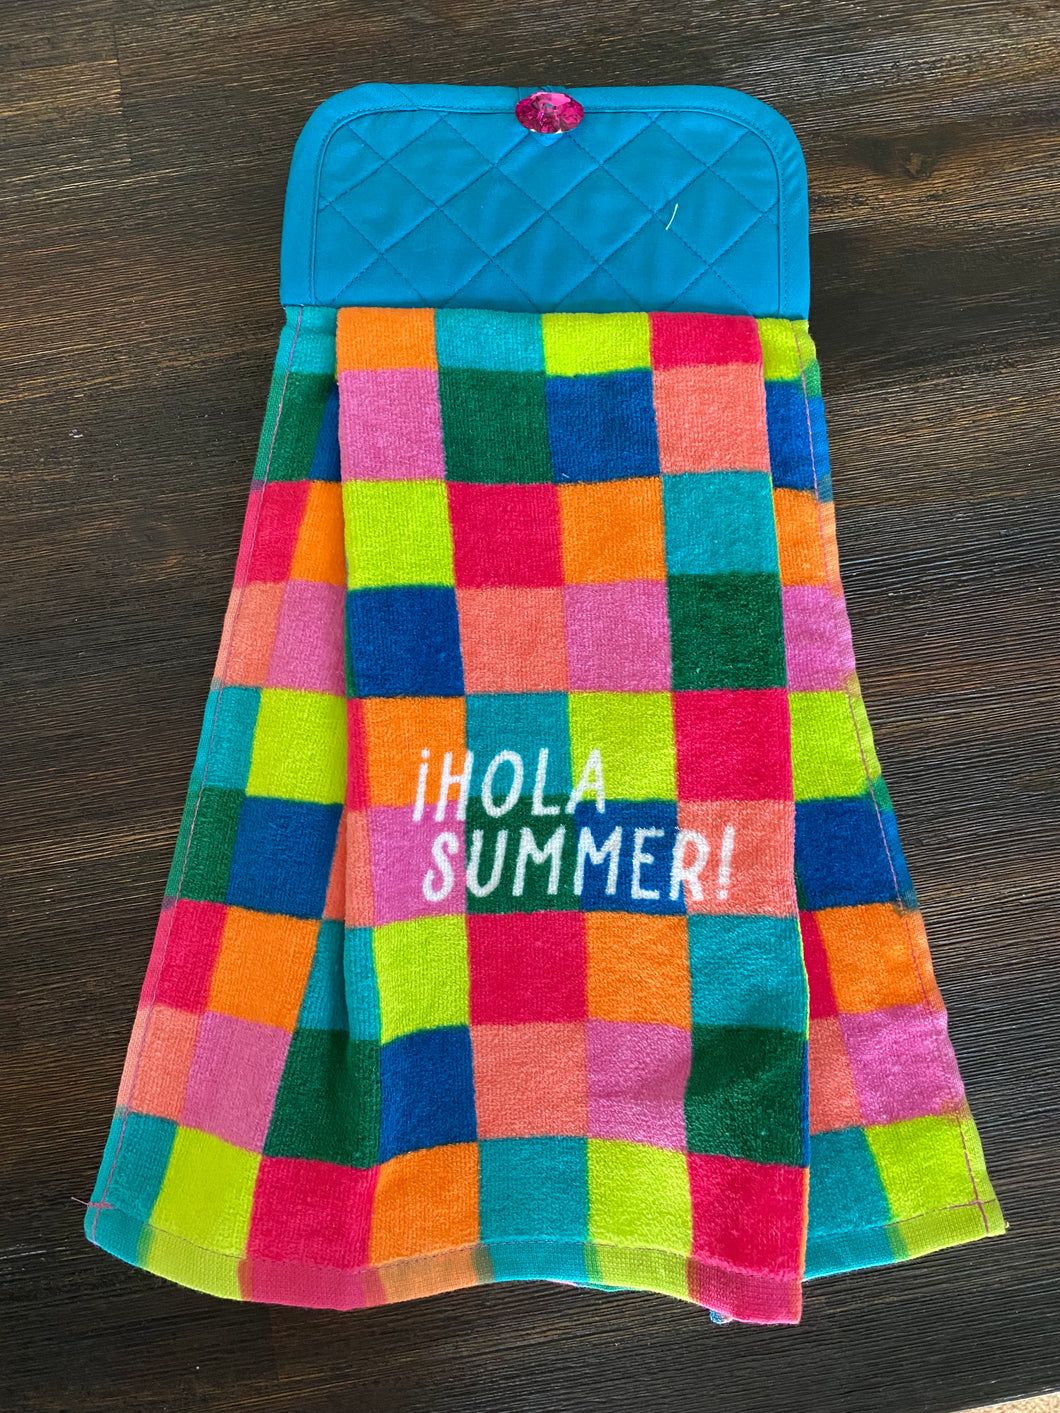 Hola Summer - Teal